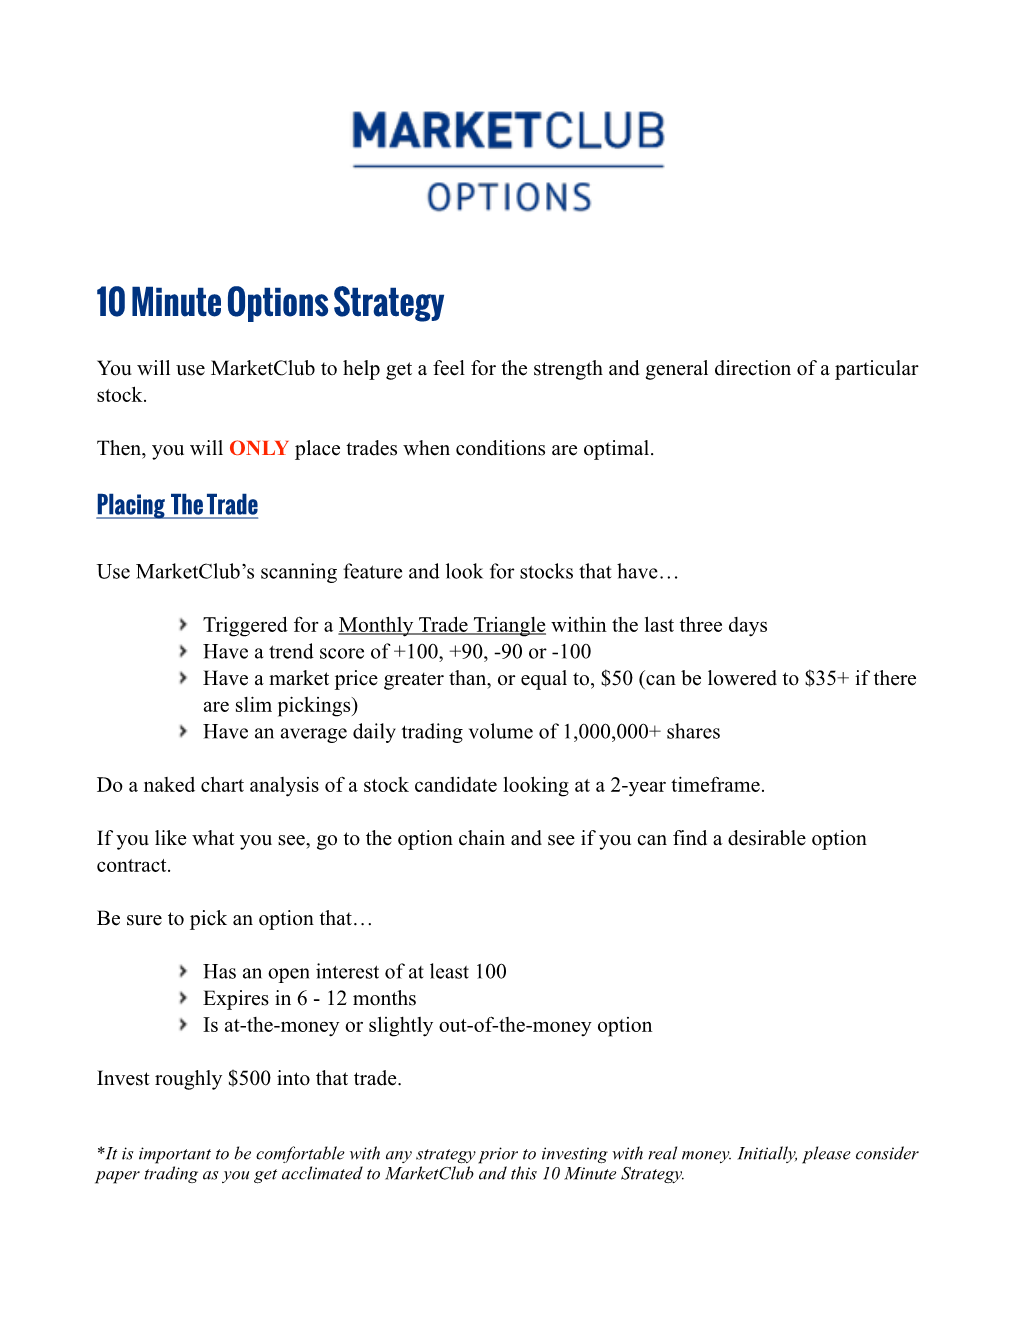 10 Min Options Strategy Handout